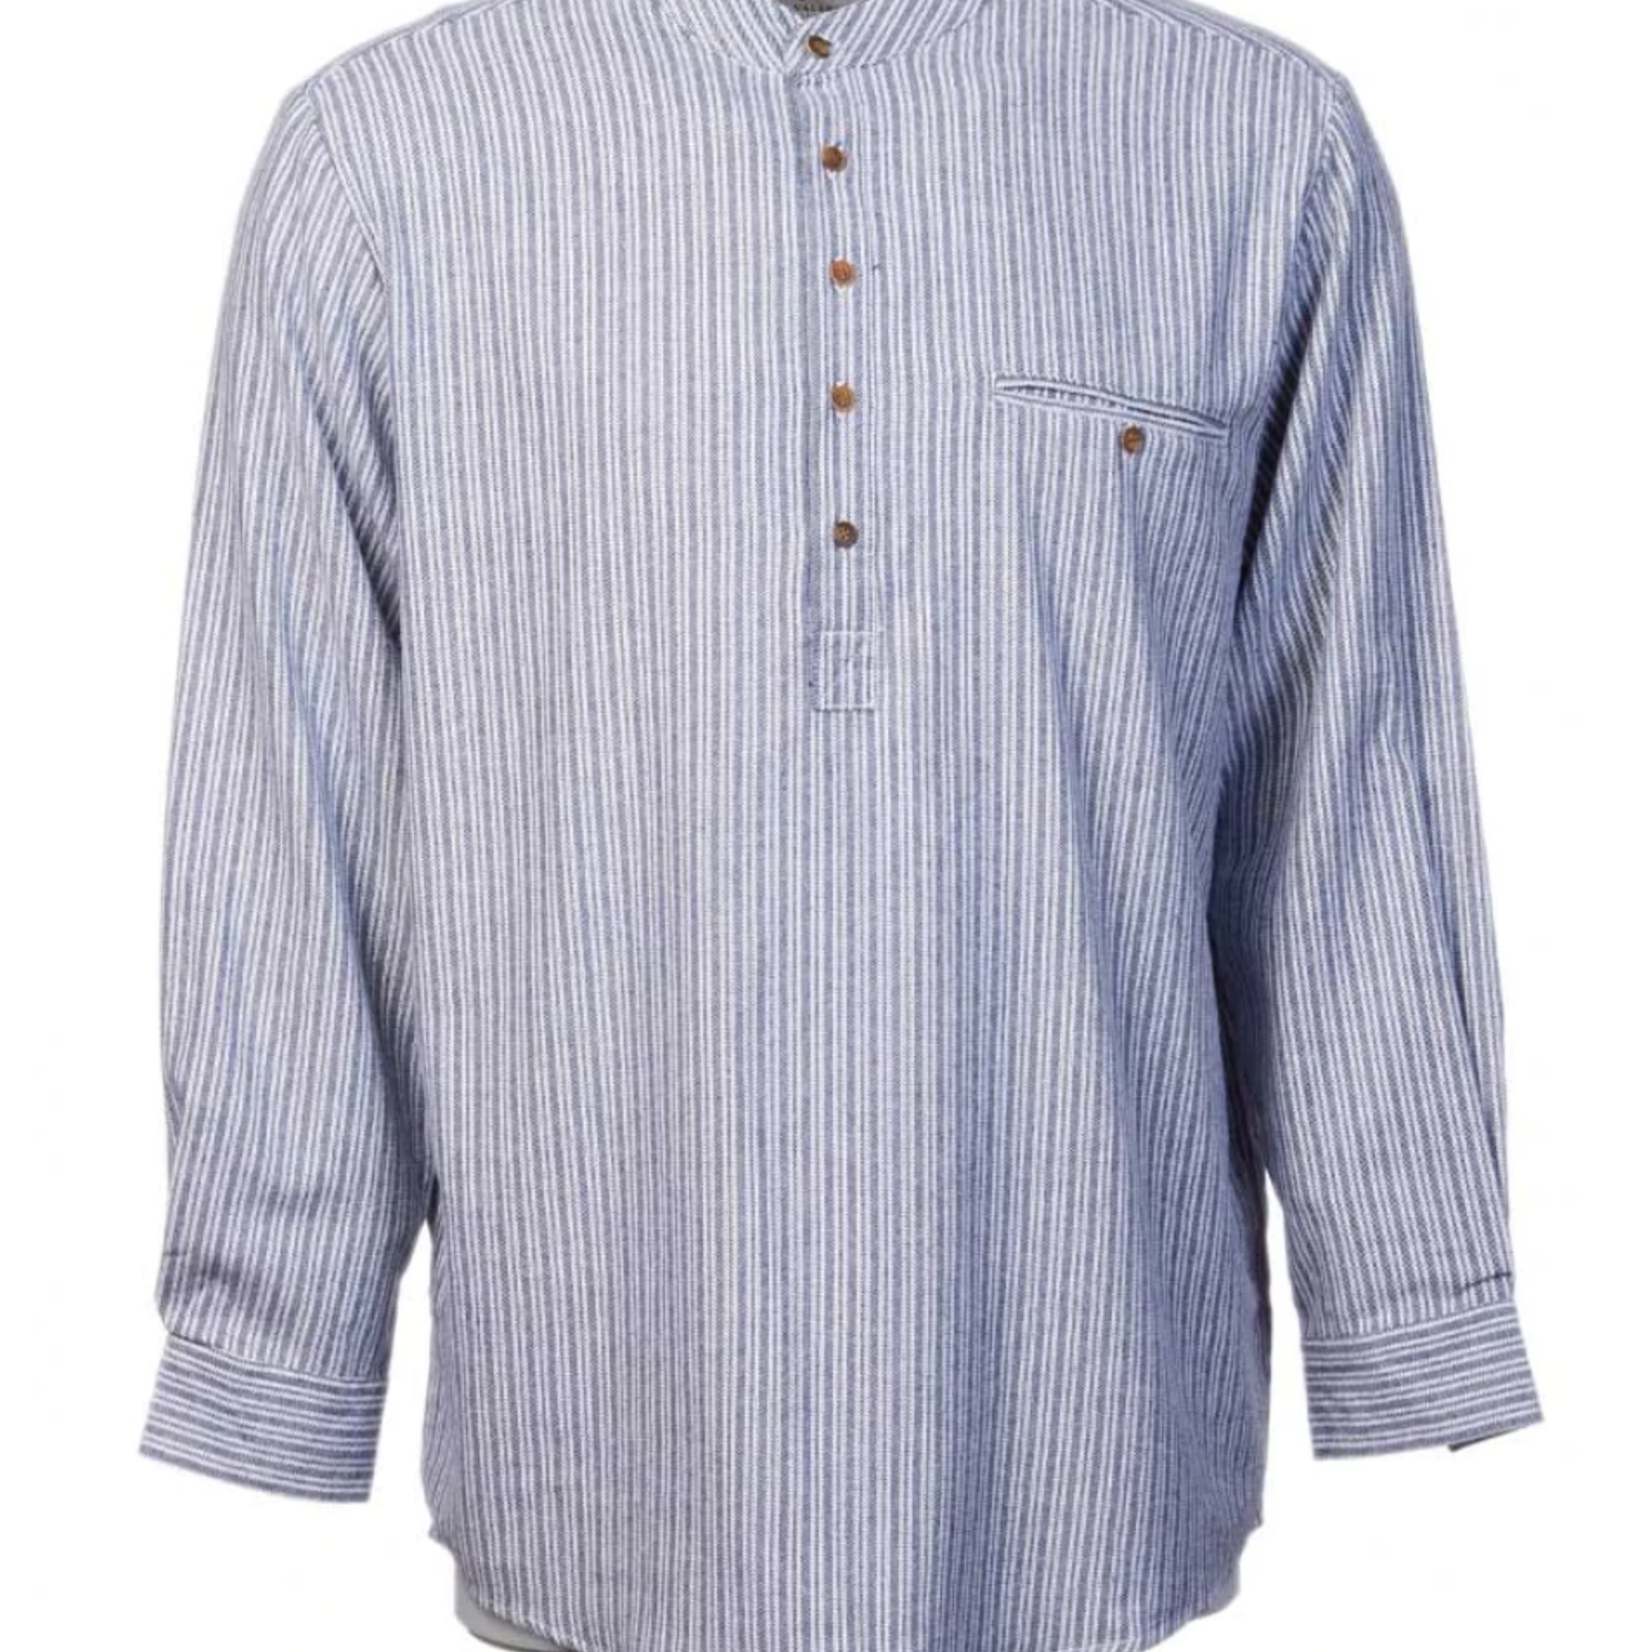 Flannel Grandfather Shirt - Grey Stripe